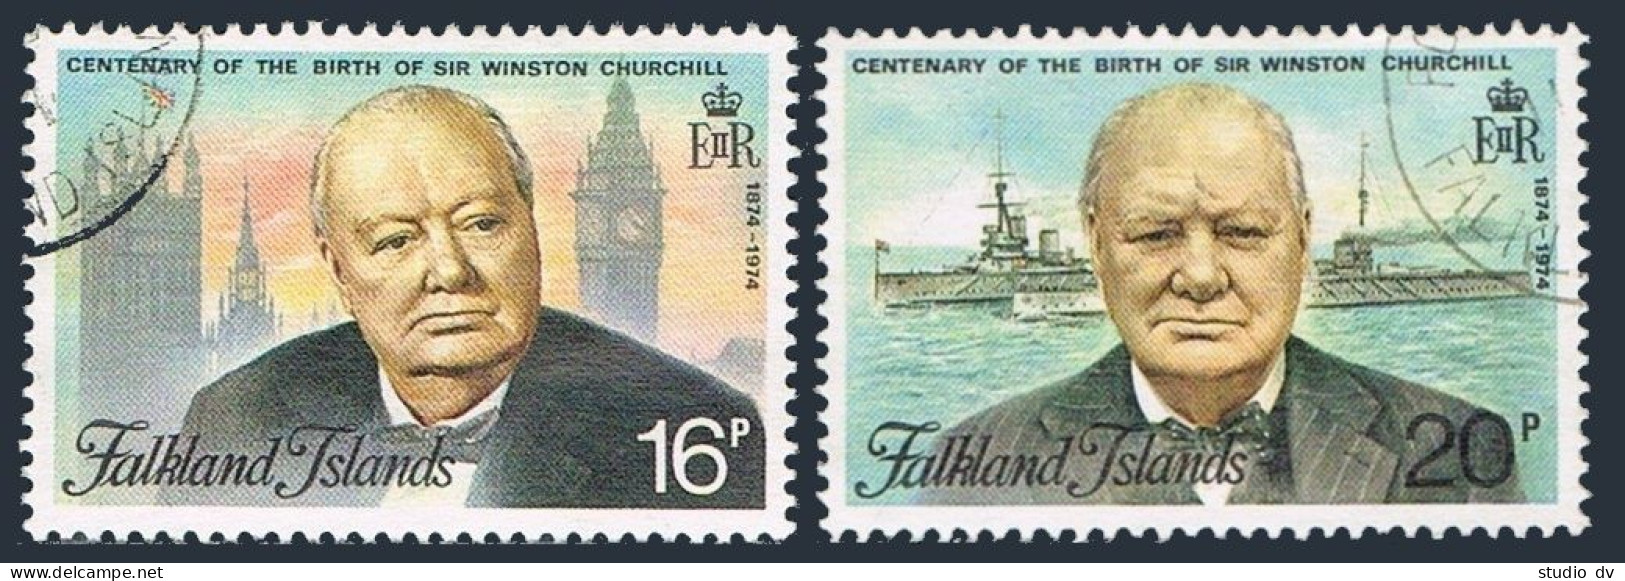 Falkland Isls 235-236,Used.Sir Winston Churchill,1974.Parliament,Big Ben,Warship - Falkland Islands